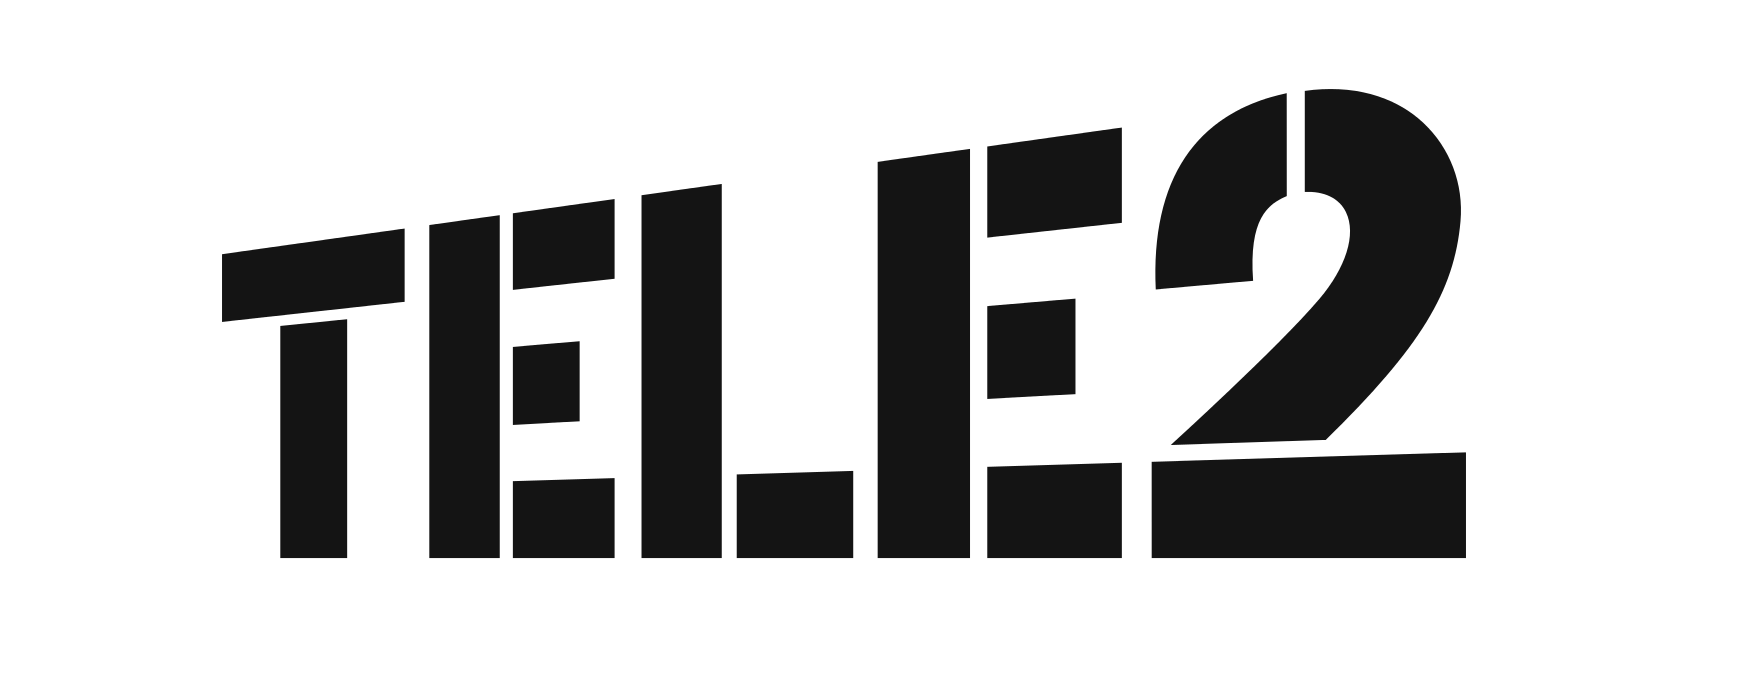 Tele2 logo by Music in Brands